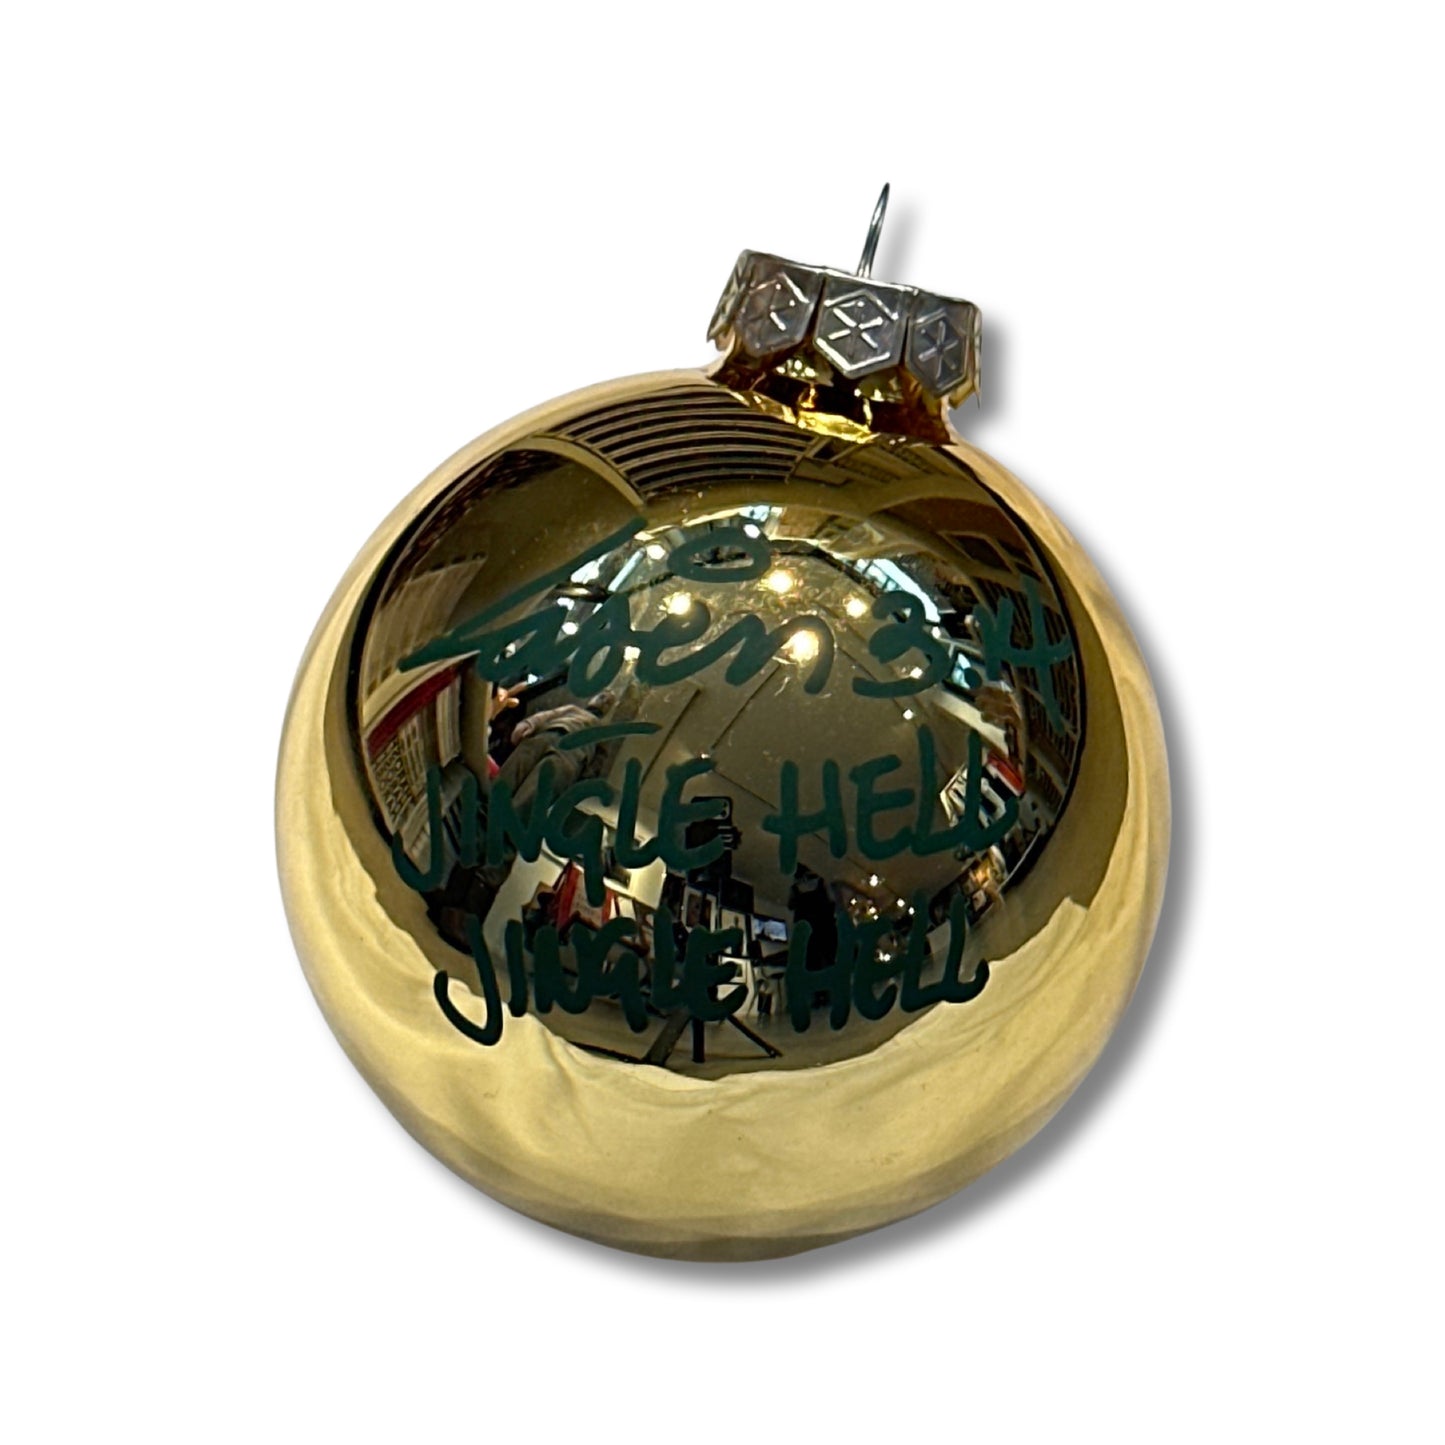 Jingle Hell | Laser 3.14 x Famous Amsterdam Christmas Ball Ornament